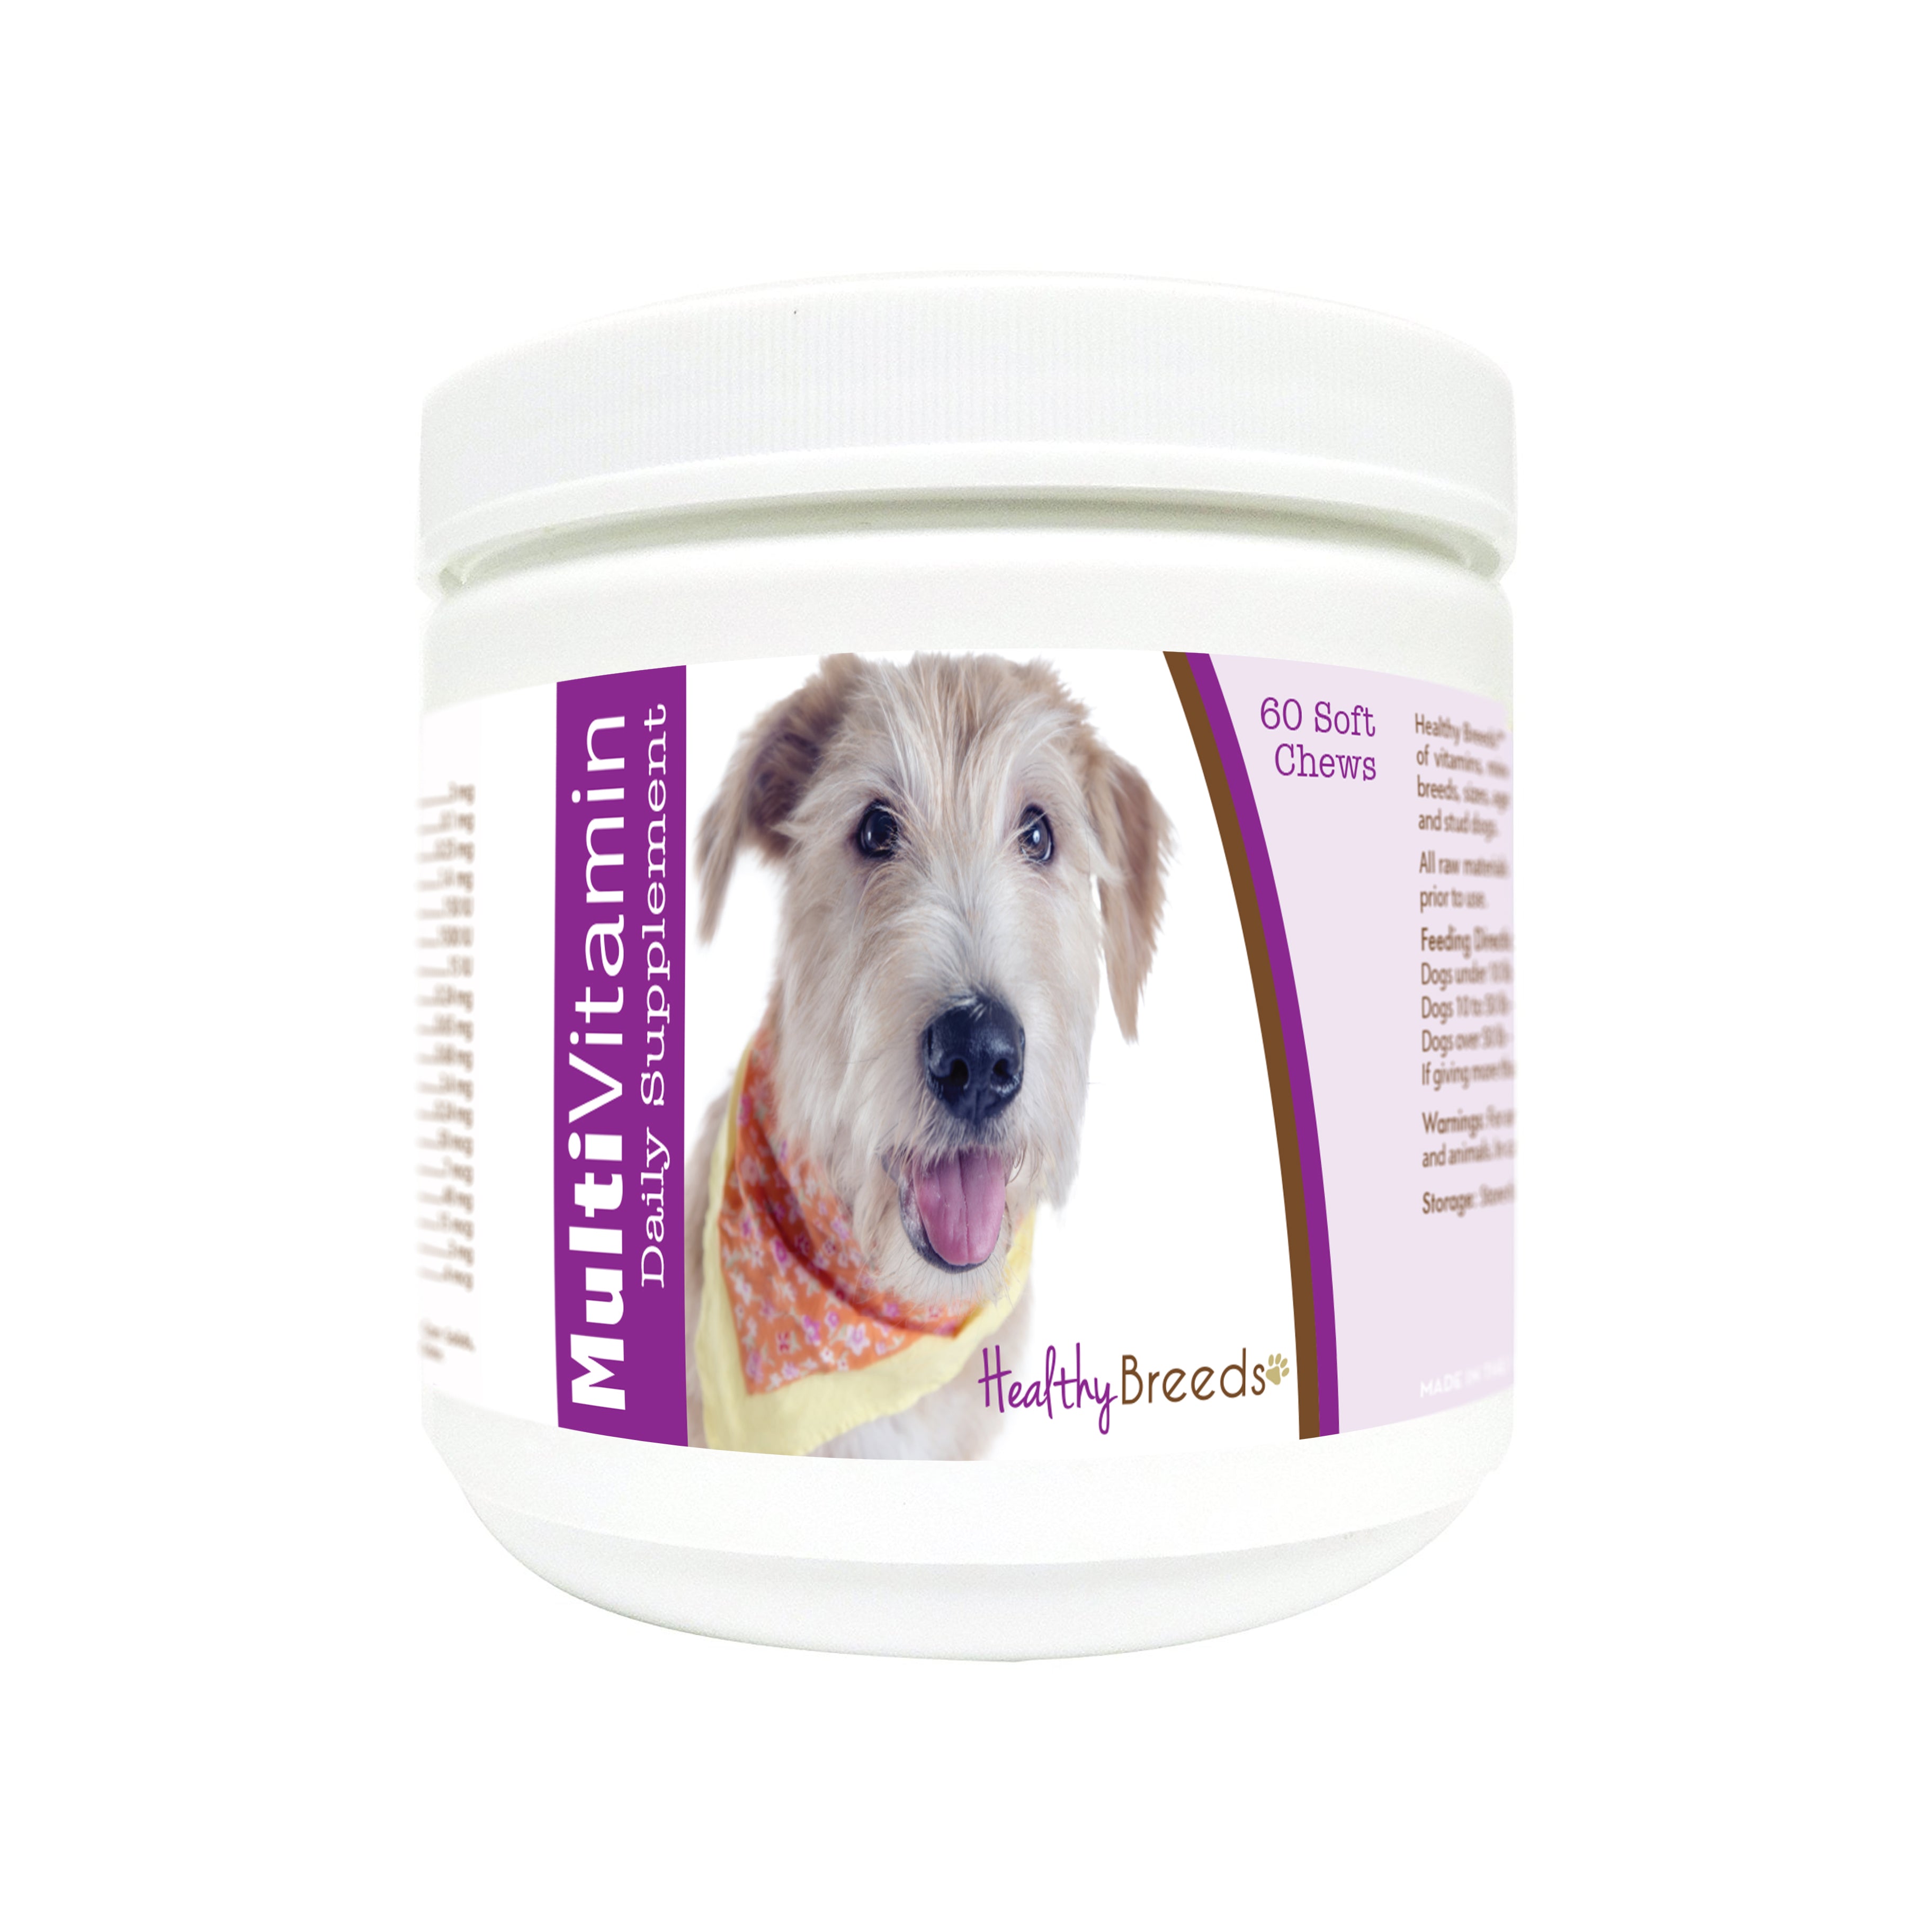 Glen of Imaal Terrier Multi-Vitamin Soft Chews 60 Count